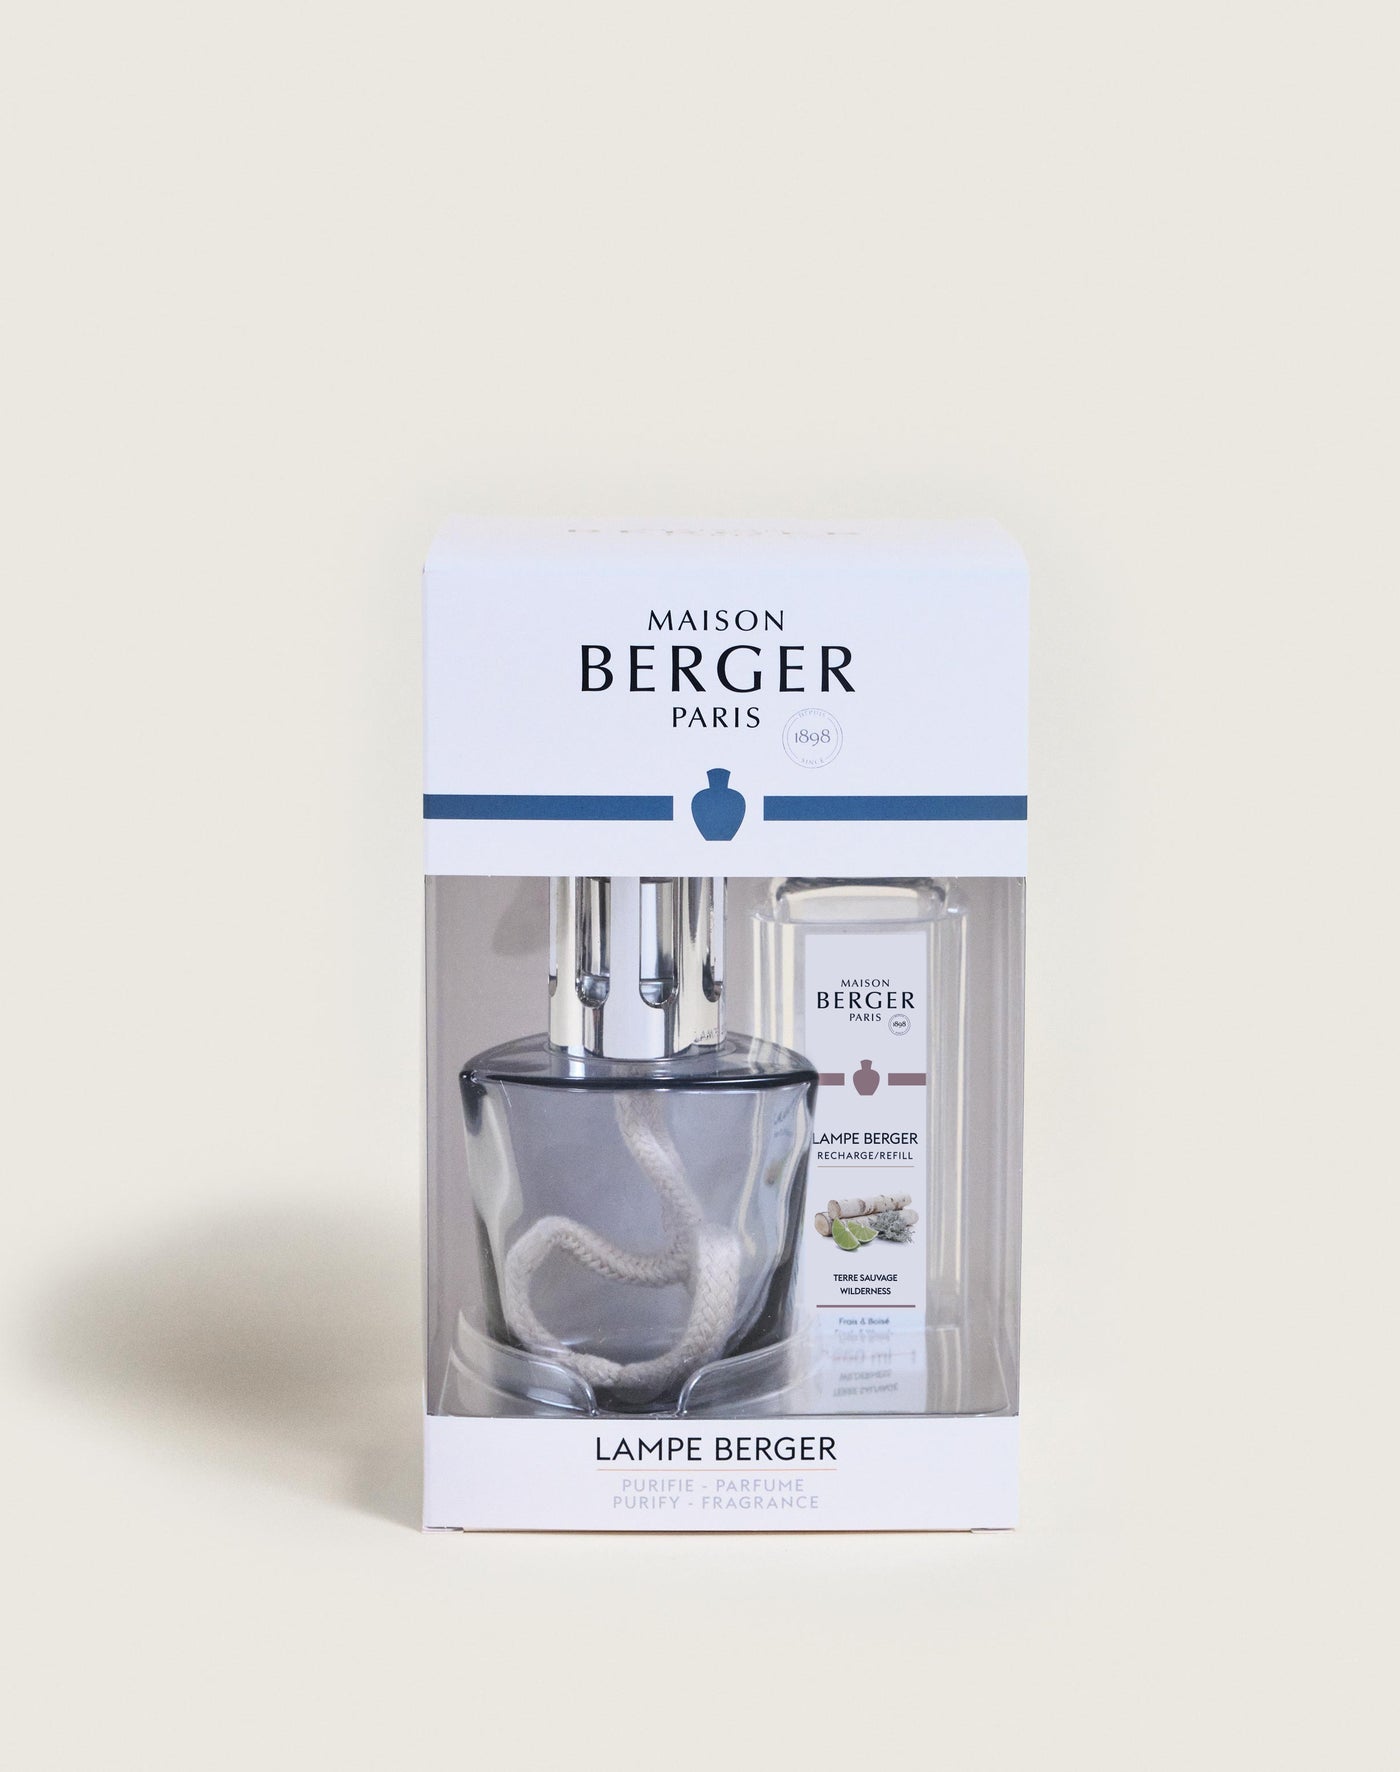 Black Terra Lamp Berger Gift Pack